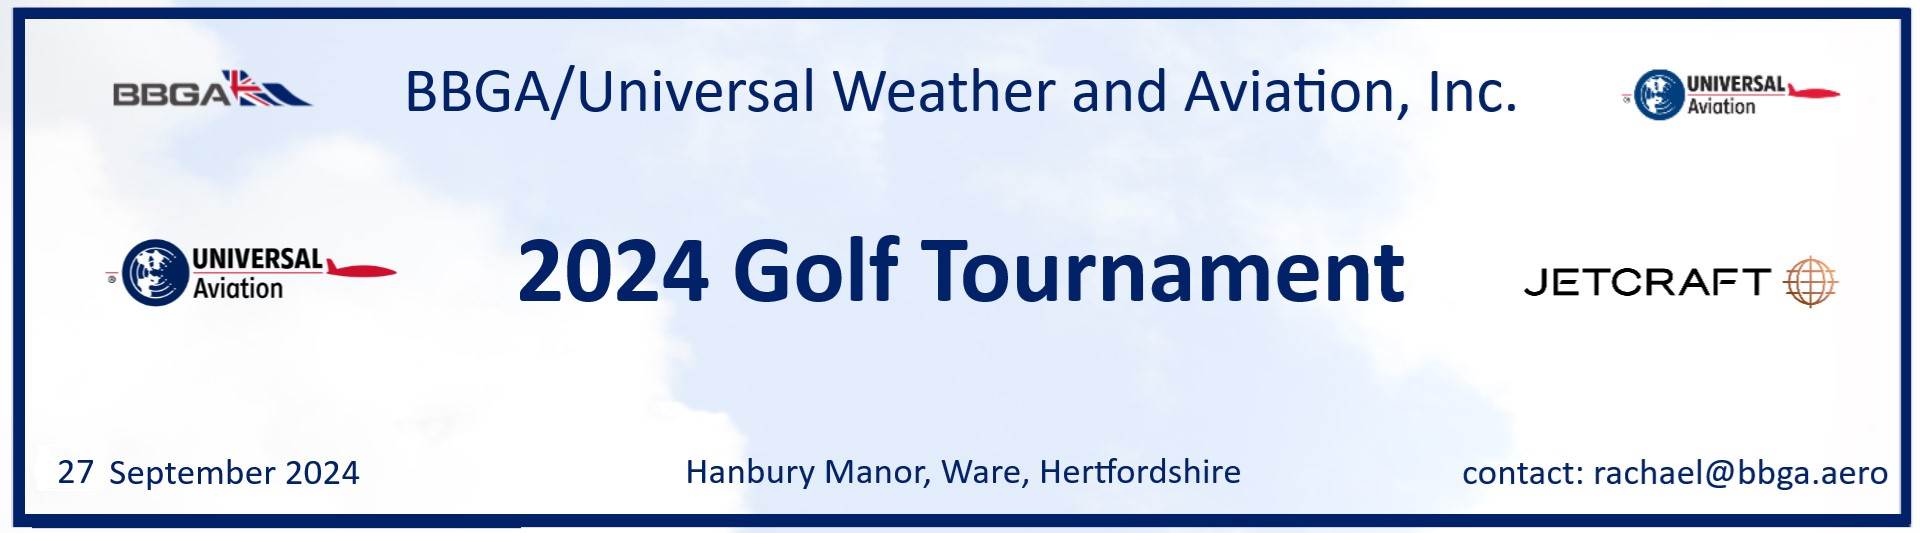 BBGA Universal Weather and Aviation, INC Golf Tournament 2024